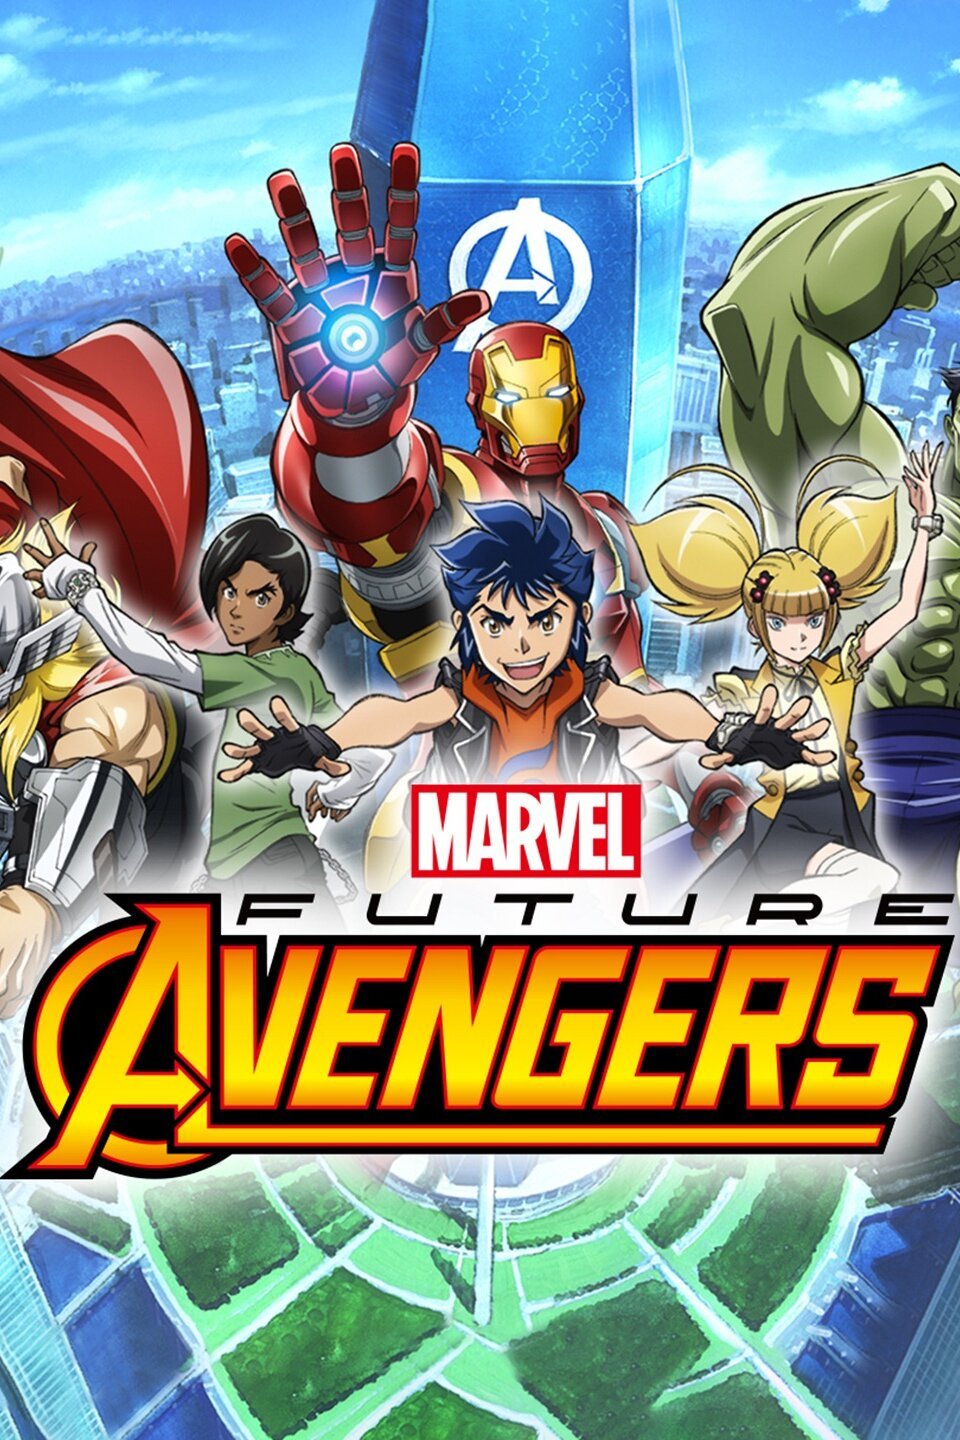 Marvel Future Avengers - Wikipedia